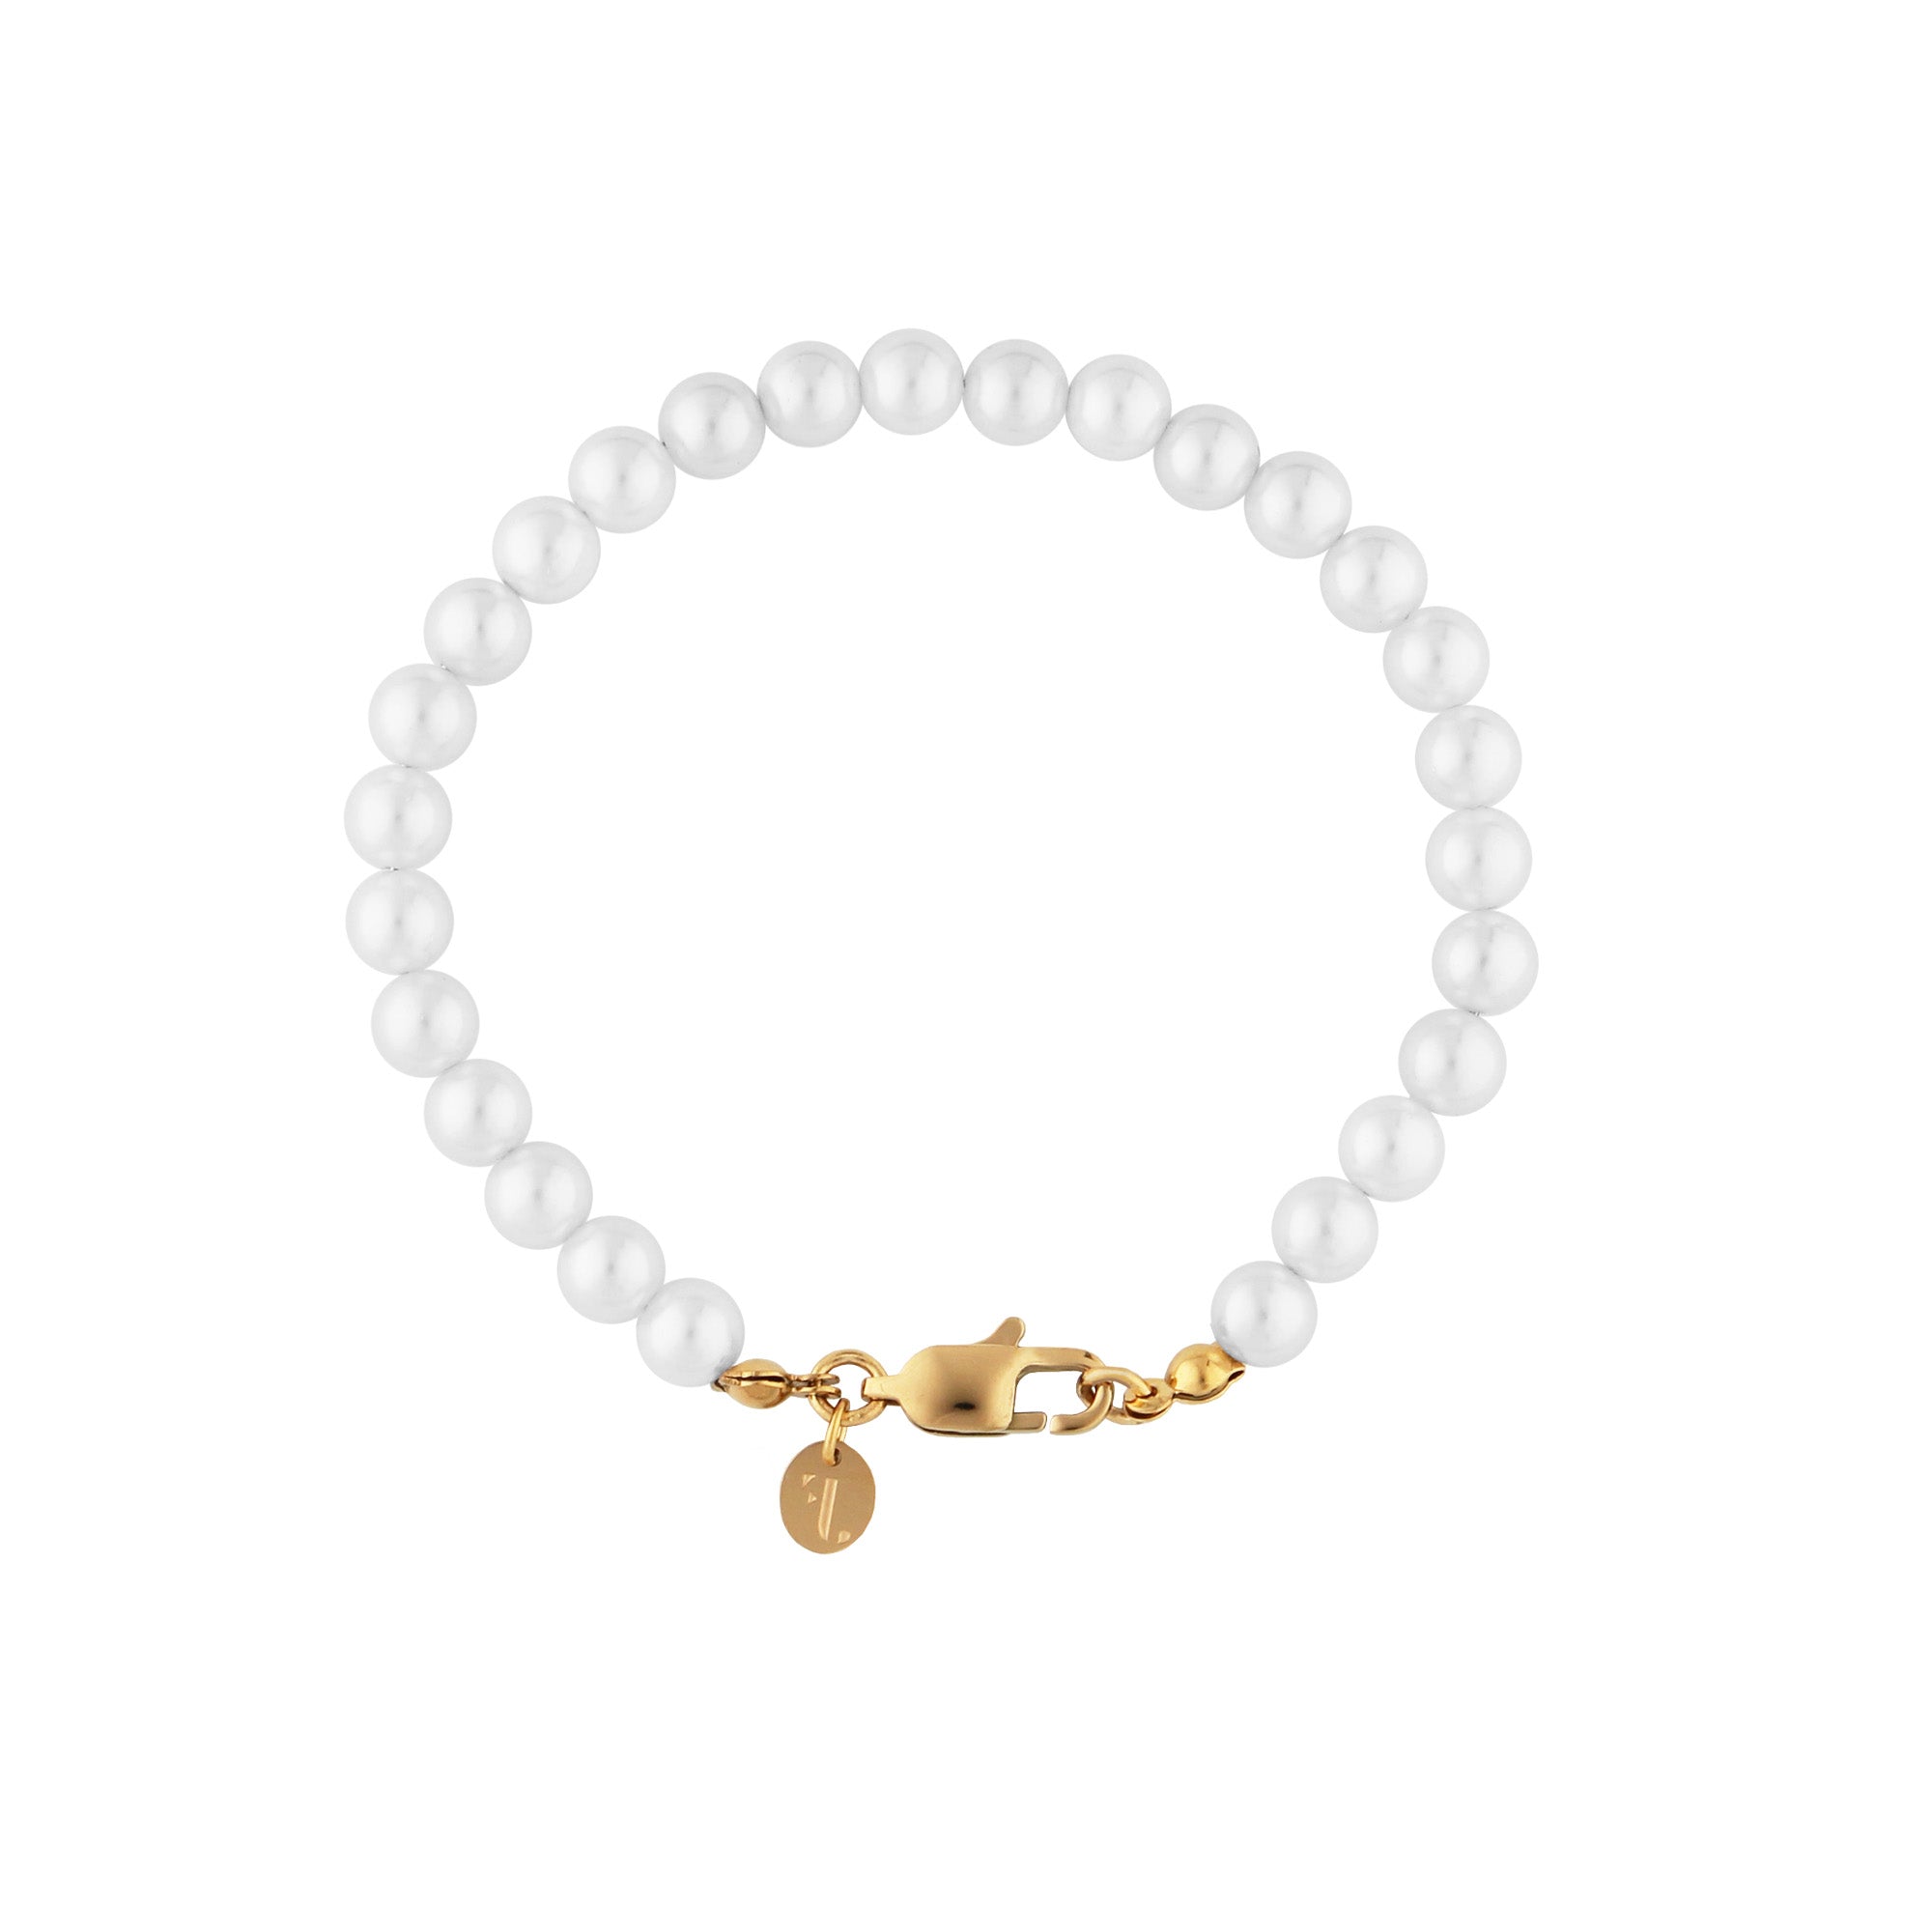 FJ Watches FIVE JWLRY jewel jewelry bijou Var bracelet white pearls beads glass verre perle blanche gold or 14k 18k 6mm women femme acier inoxydable stainless steel